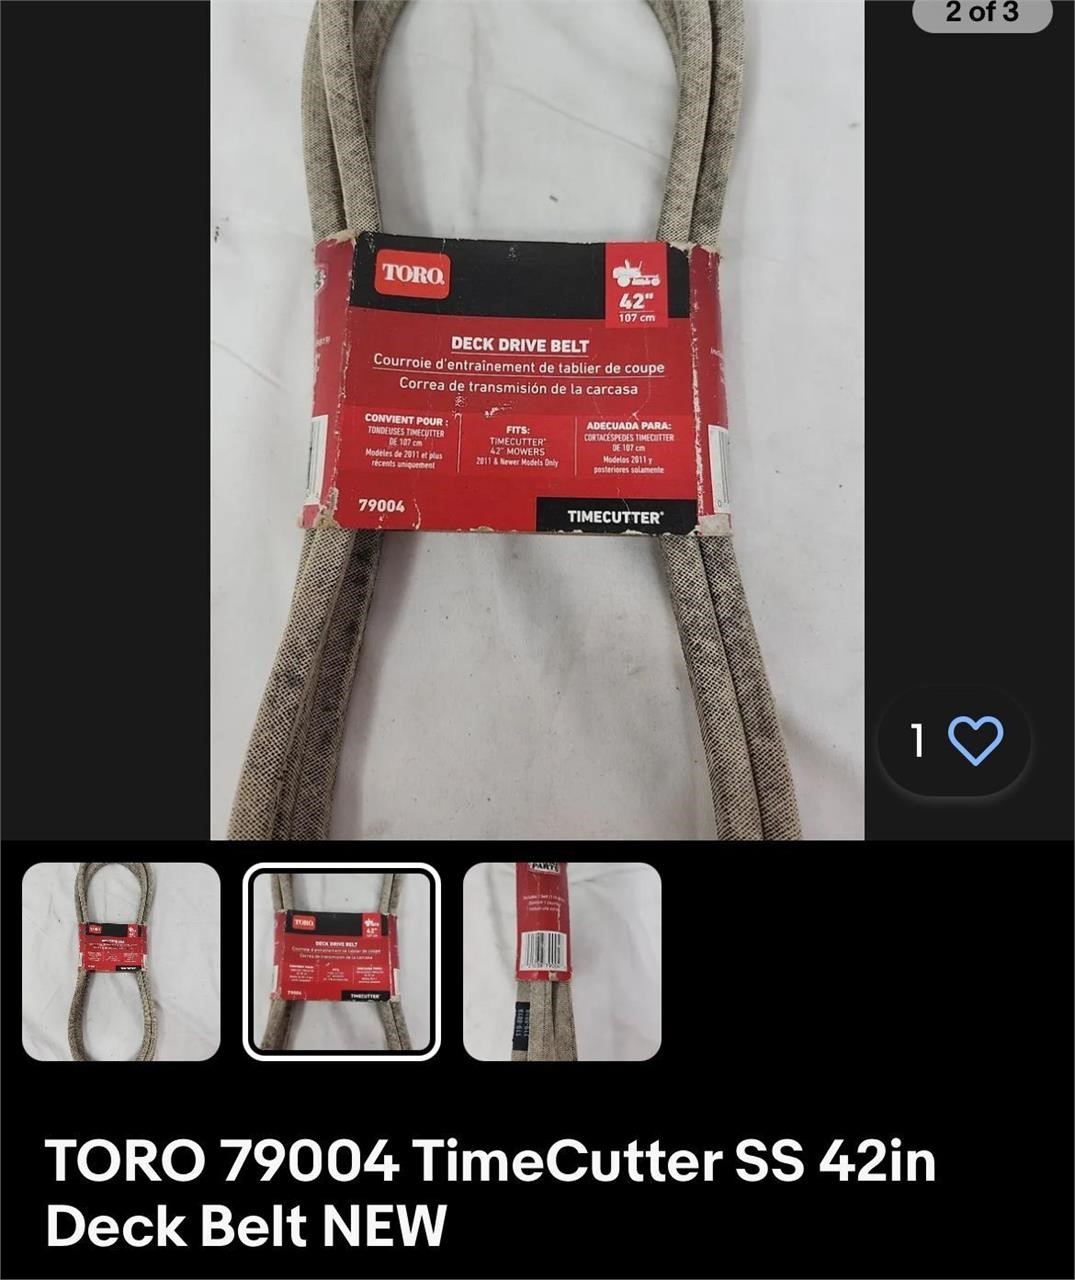 TORO 79004 TimeCutter SS 42in